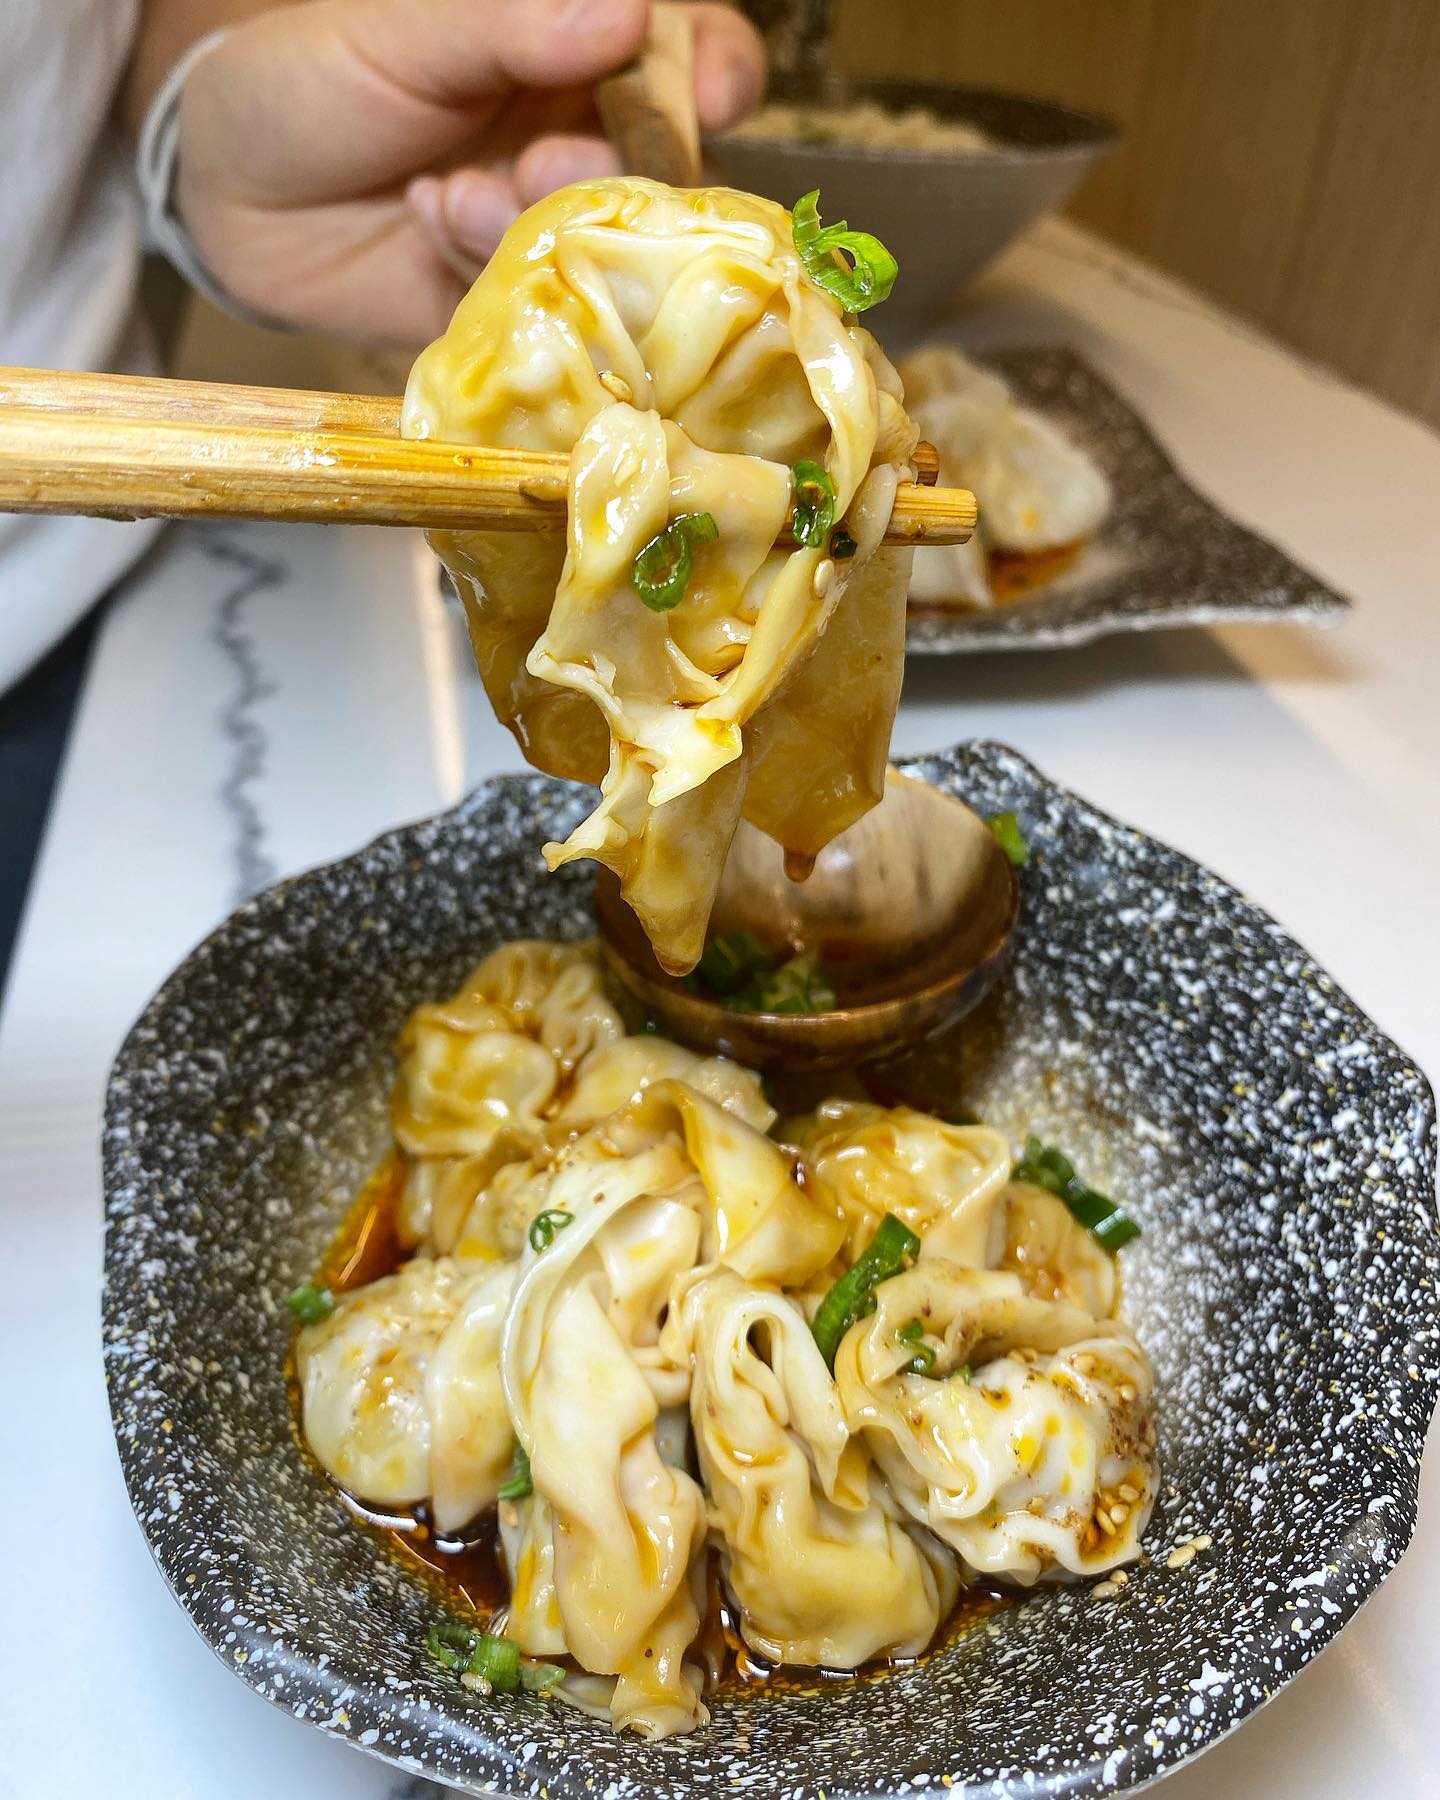 A pair of chopsticks hold a wonton over a bowl of wontons